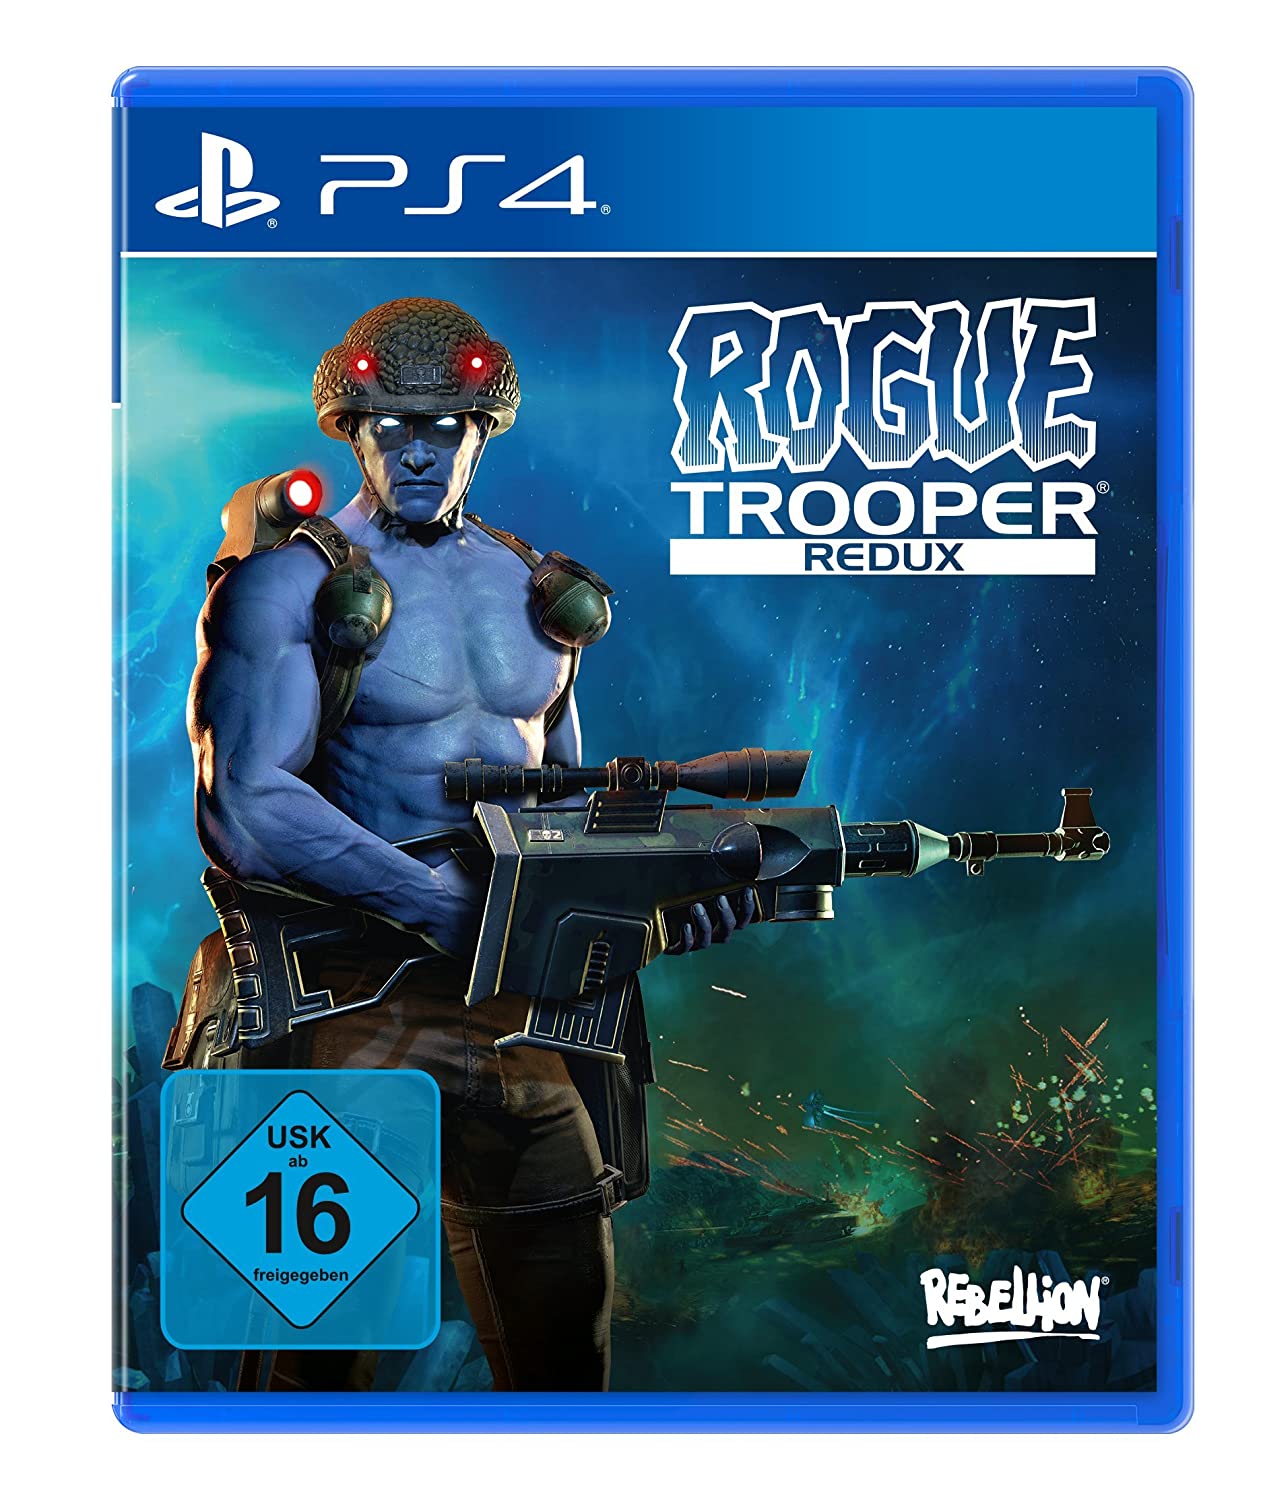 Rogue Trooper. Rouge Troopers Redux. Rogue Trooper Remastered. Rogue trooper redux